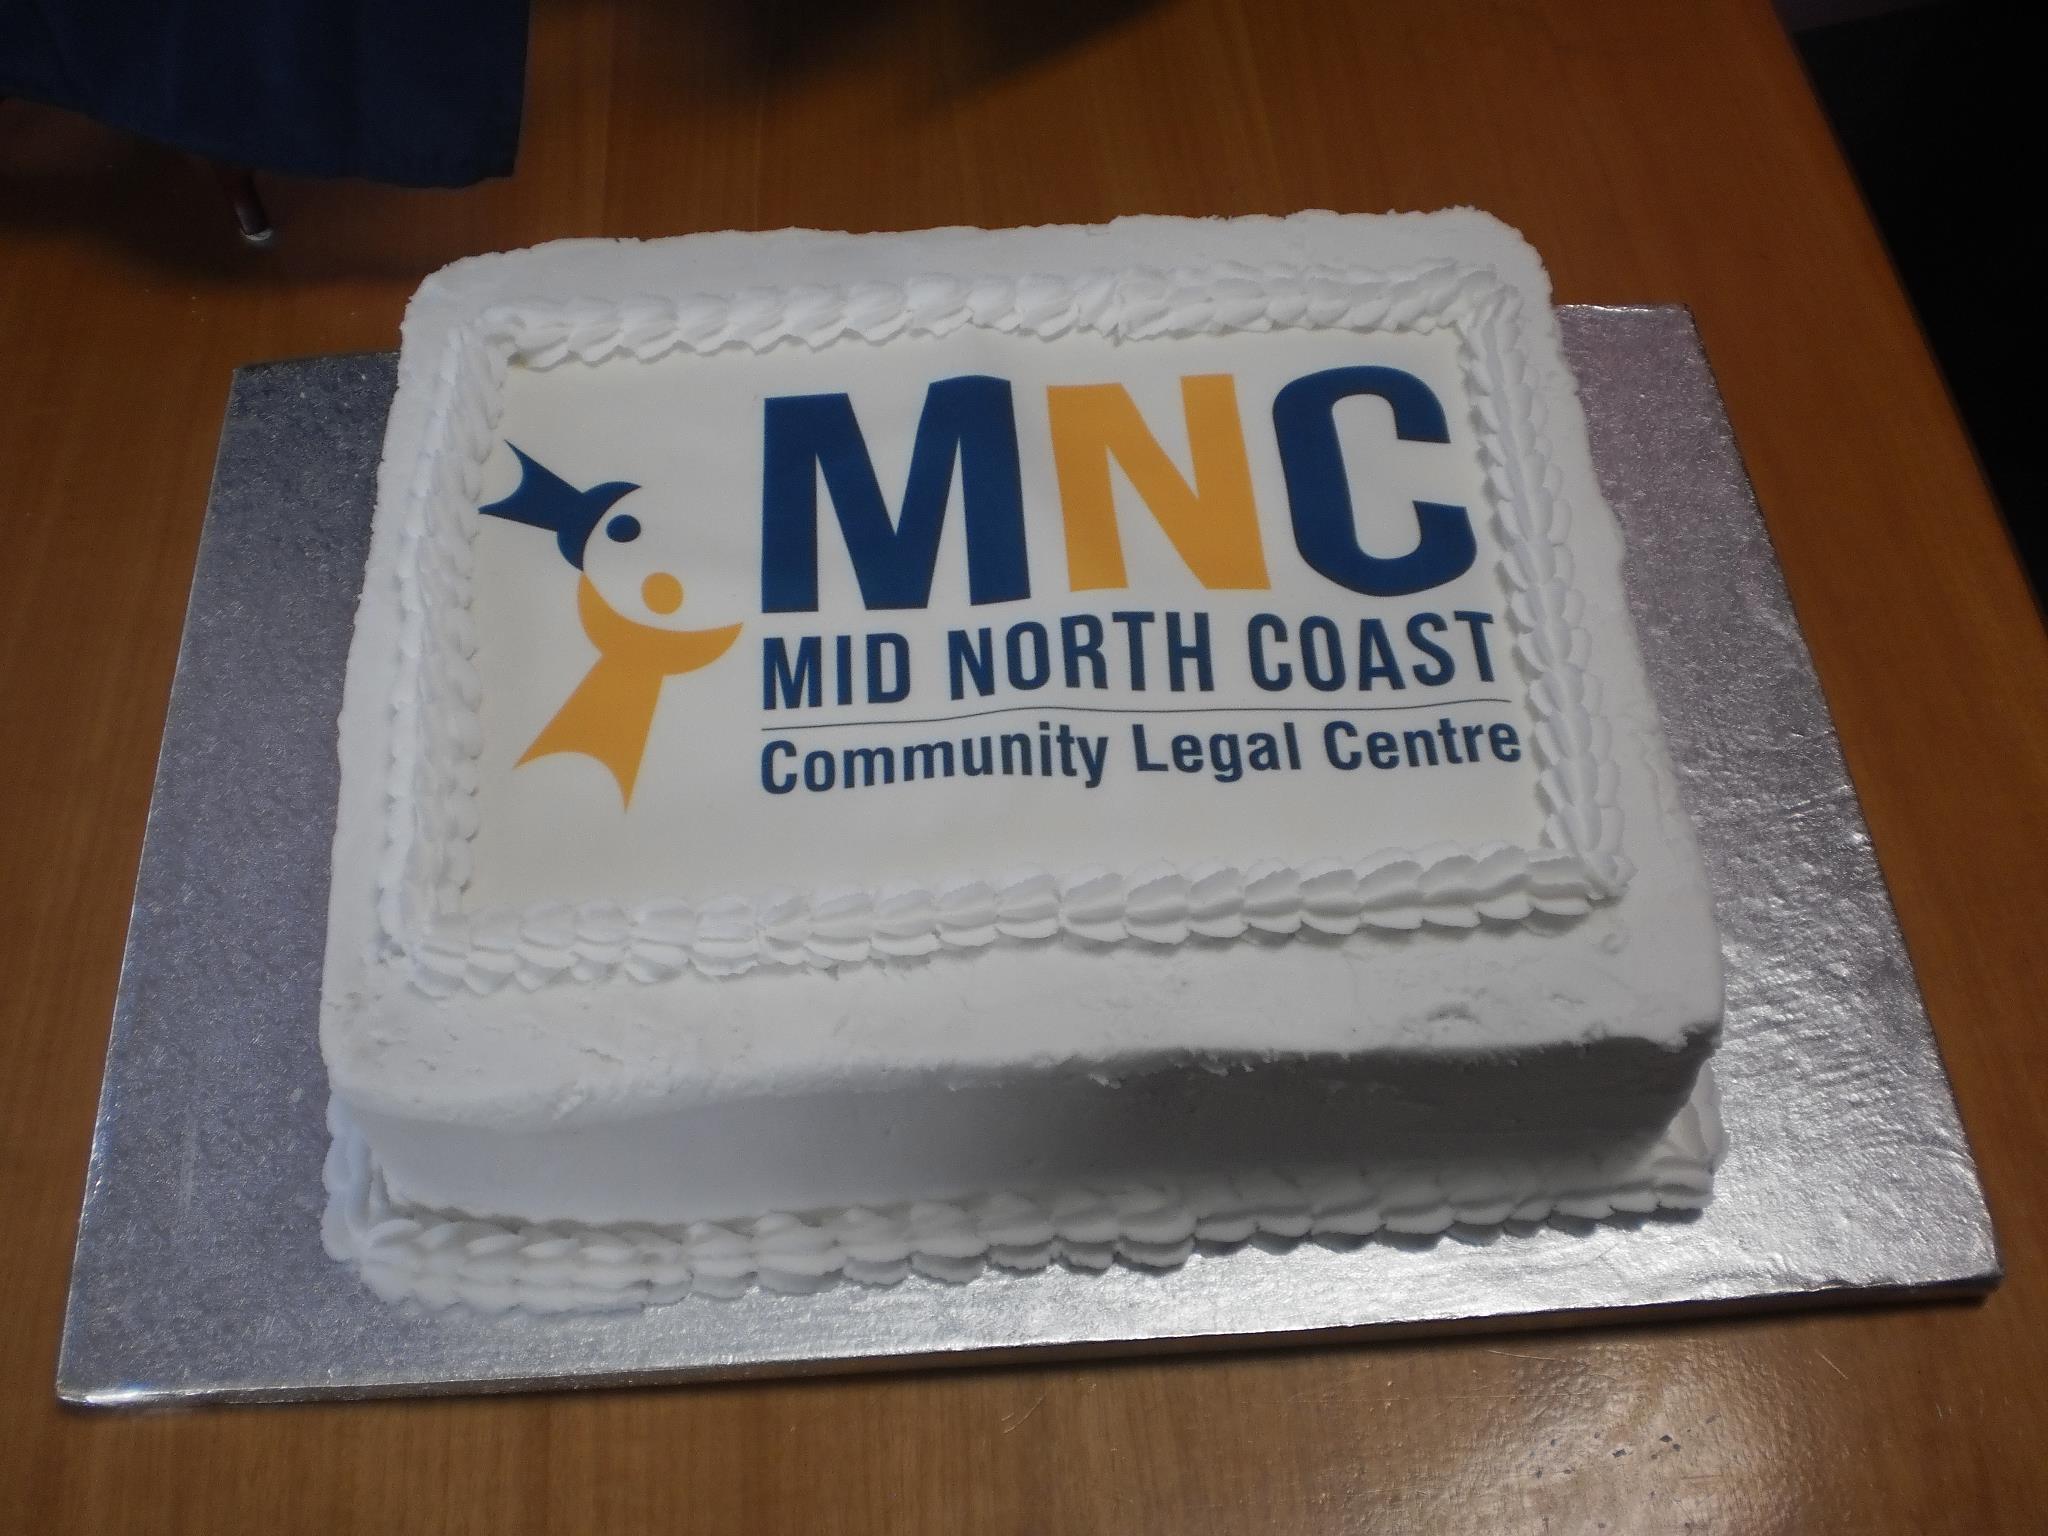 Mid North Coast Community Legal Centre